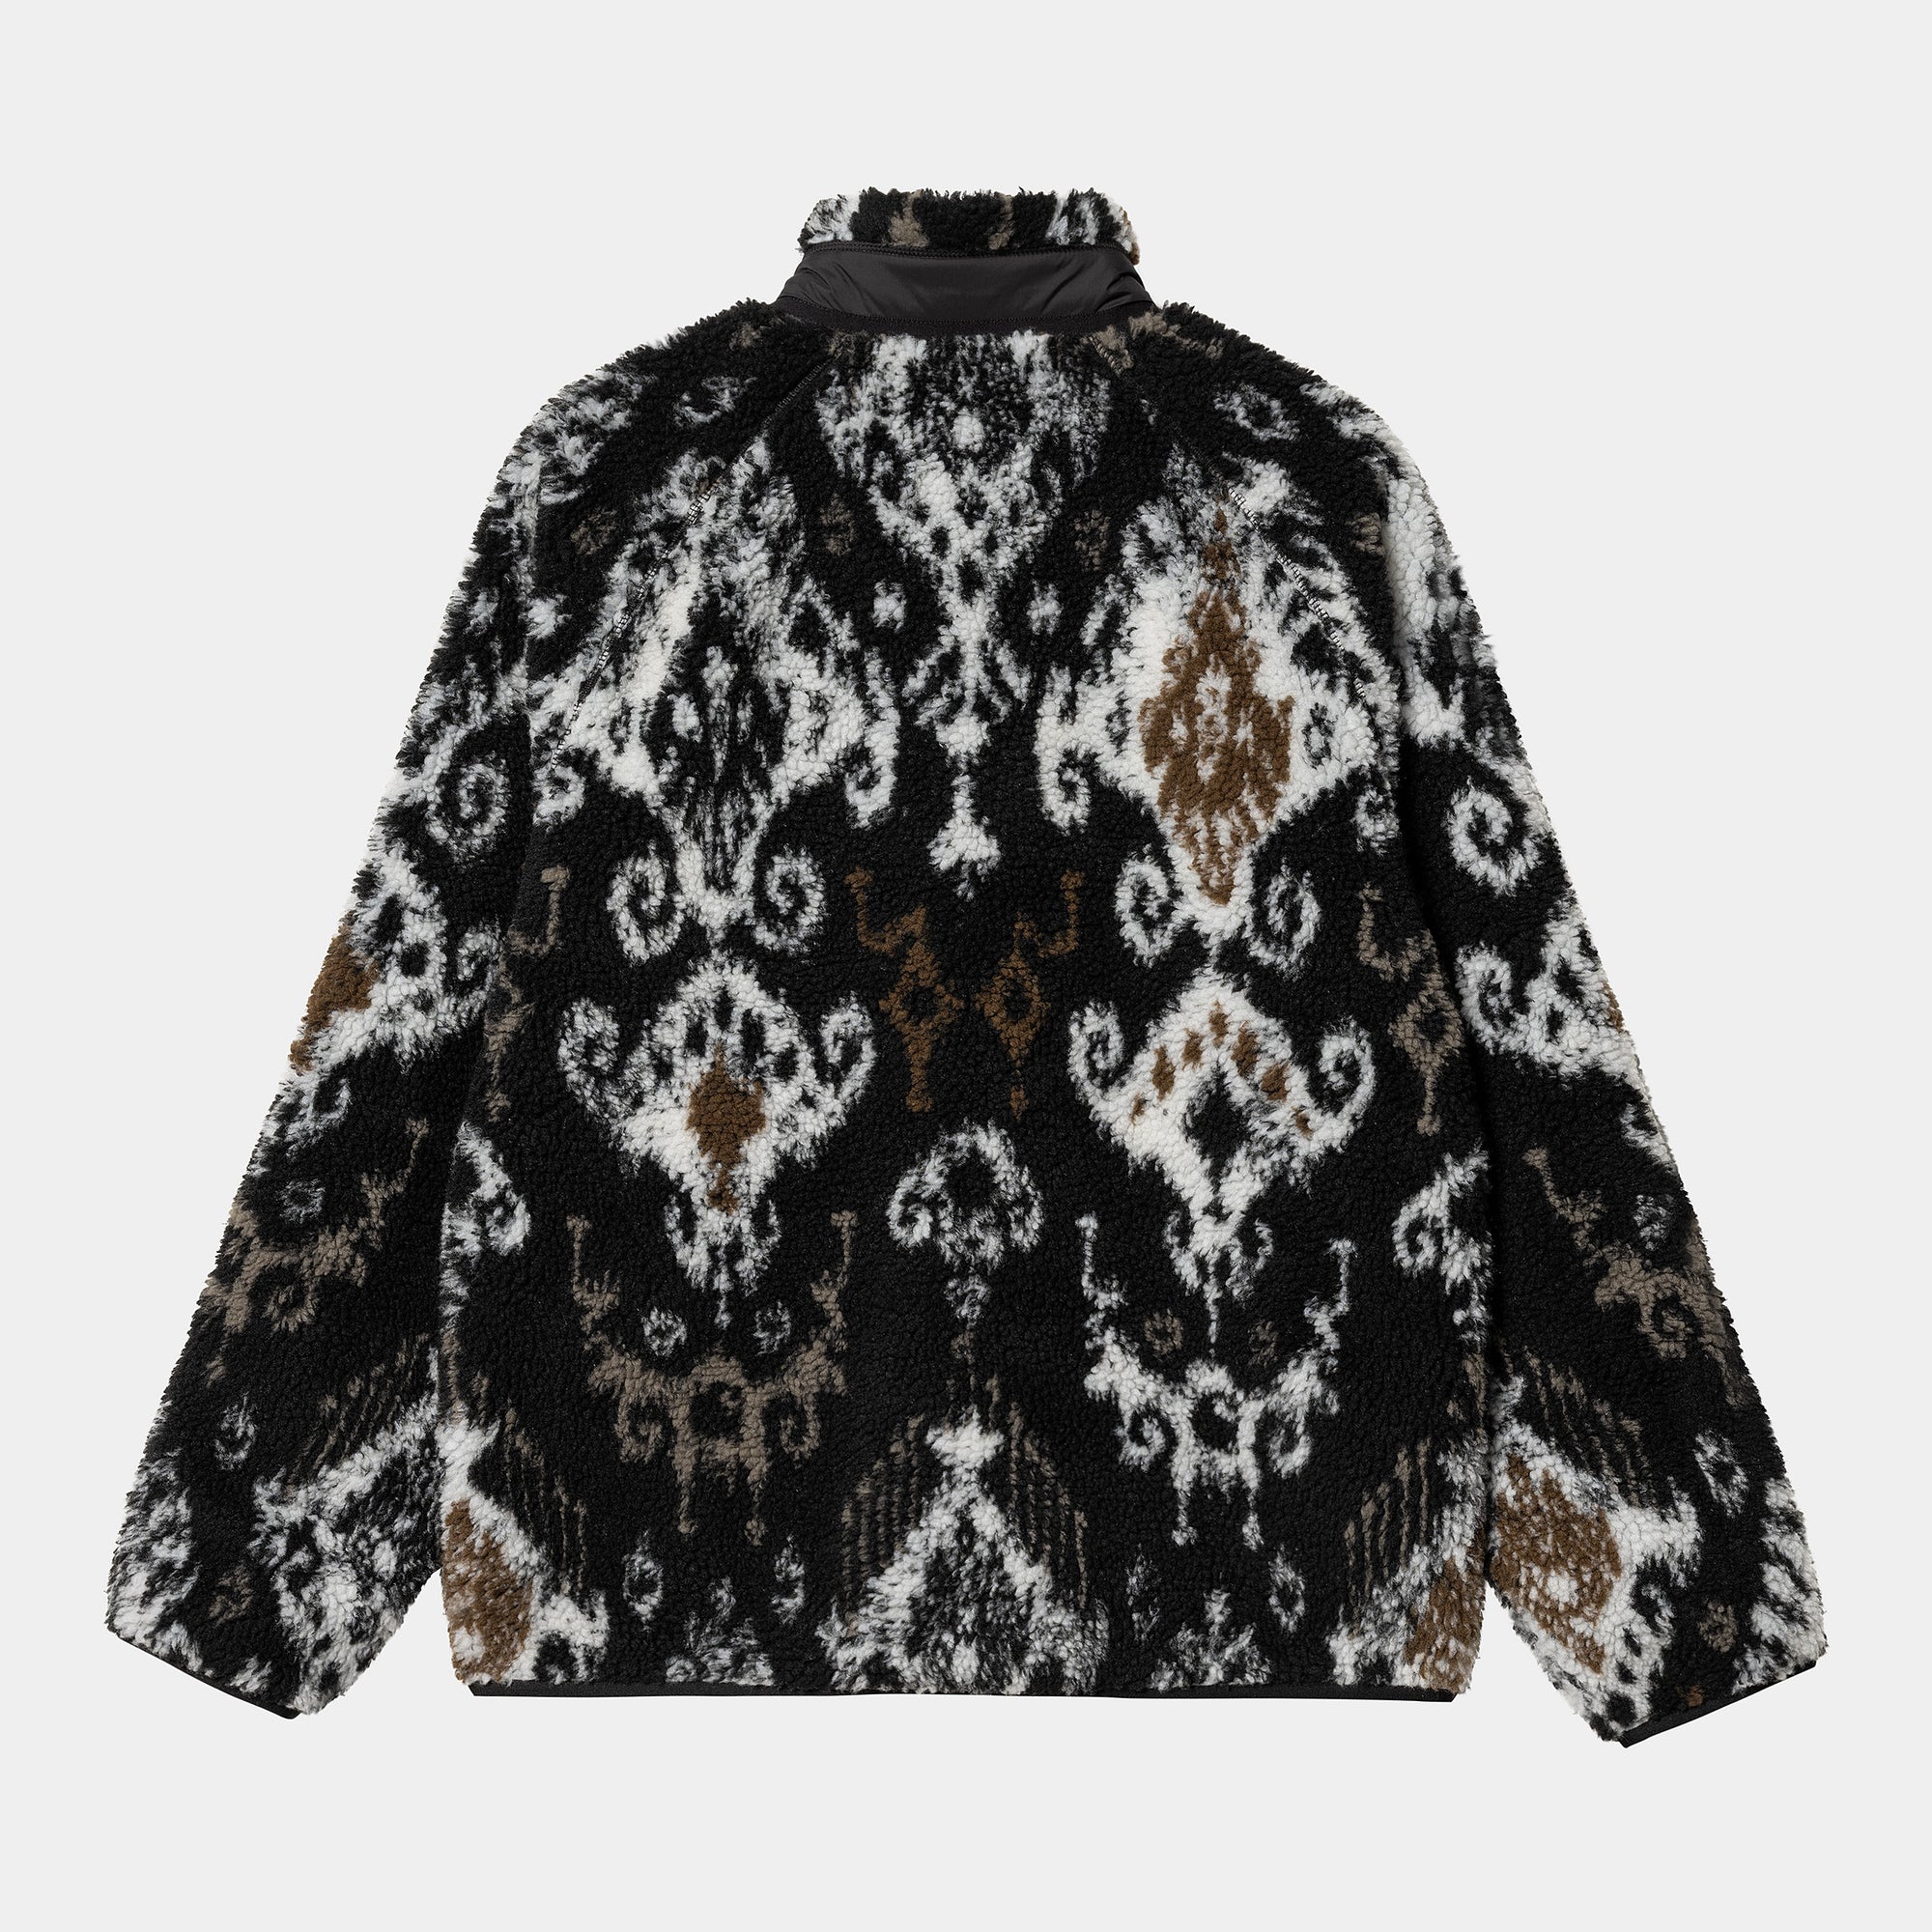 Carhartt WIP - Prentis Liner Fleece Jacket - Baru Jacquard / Black / Black